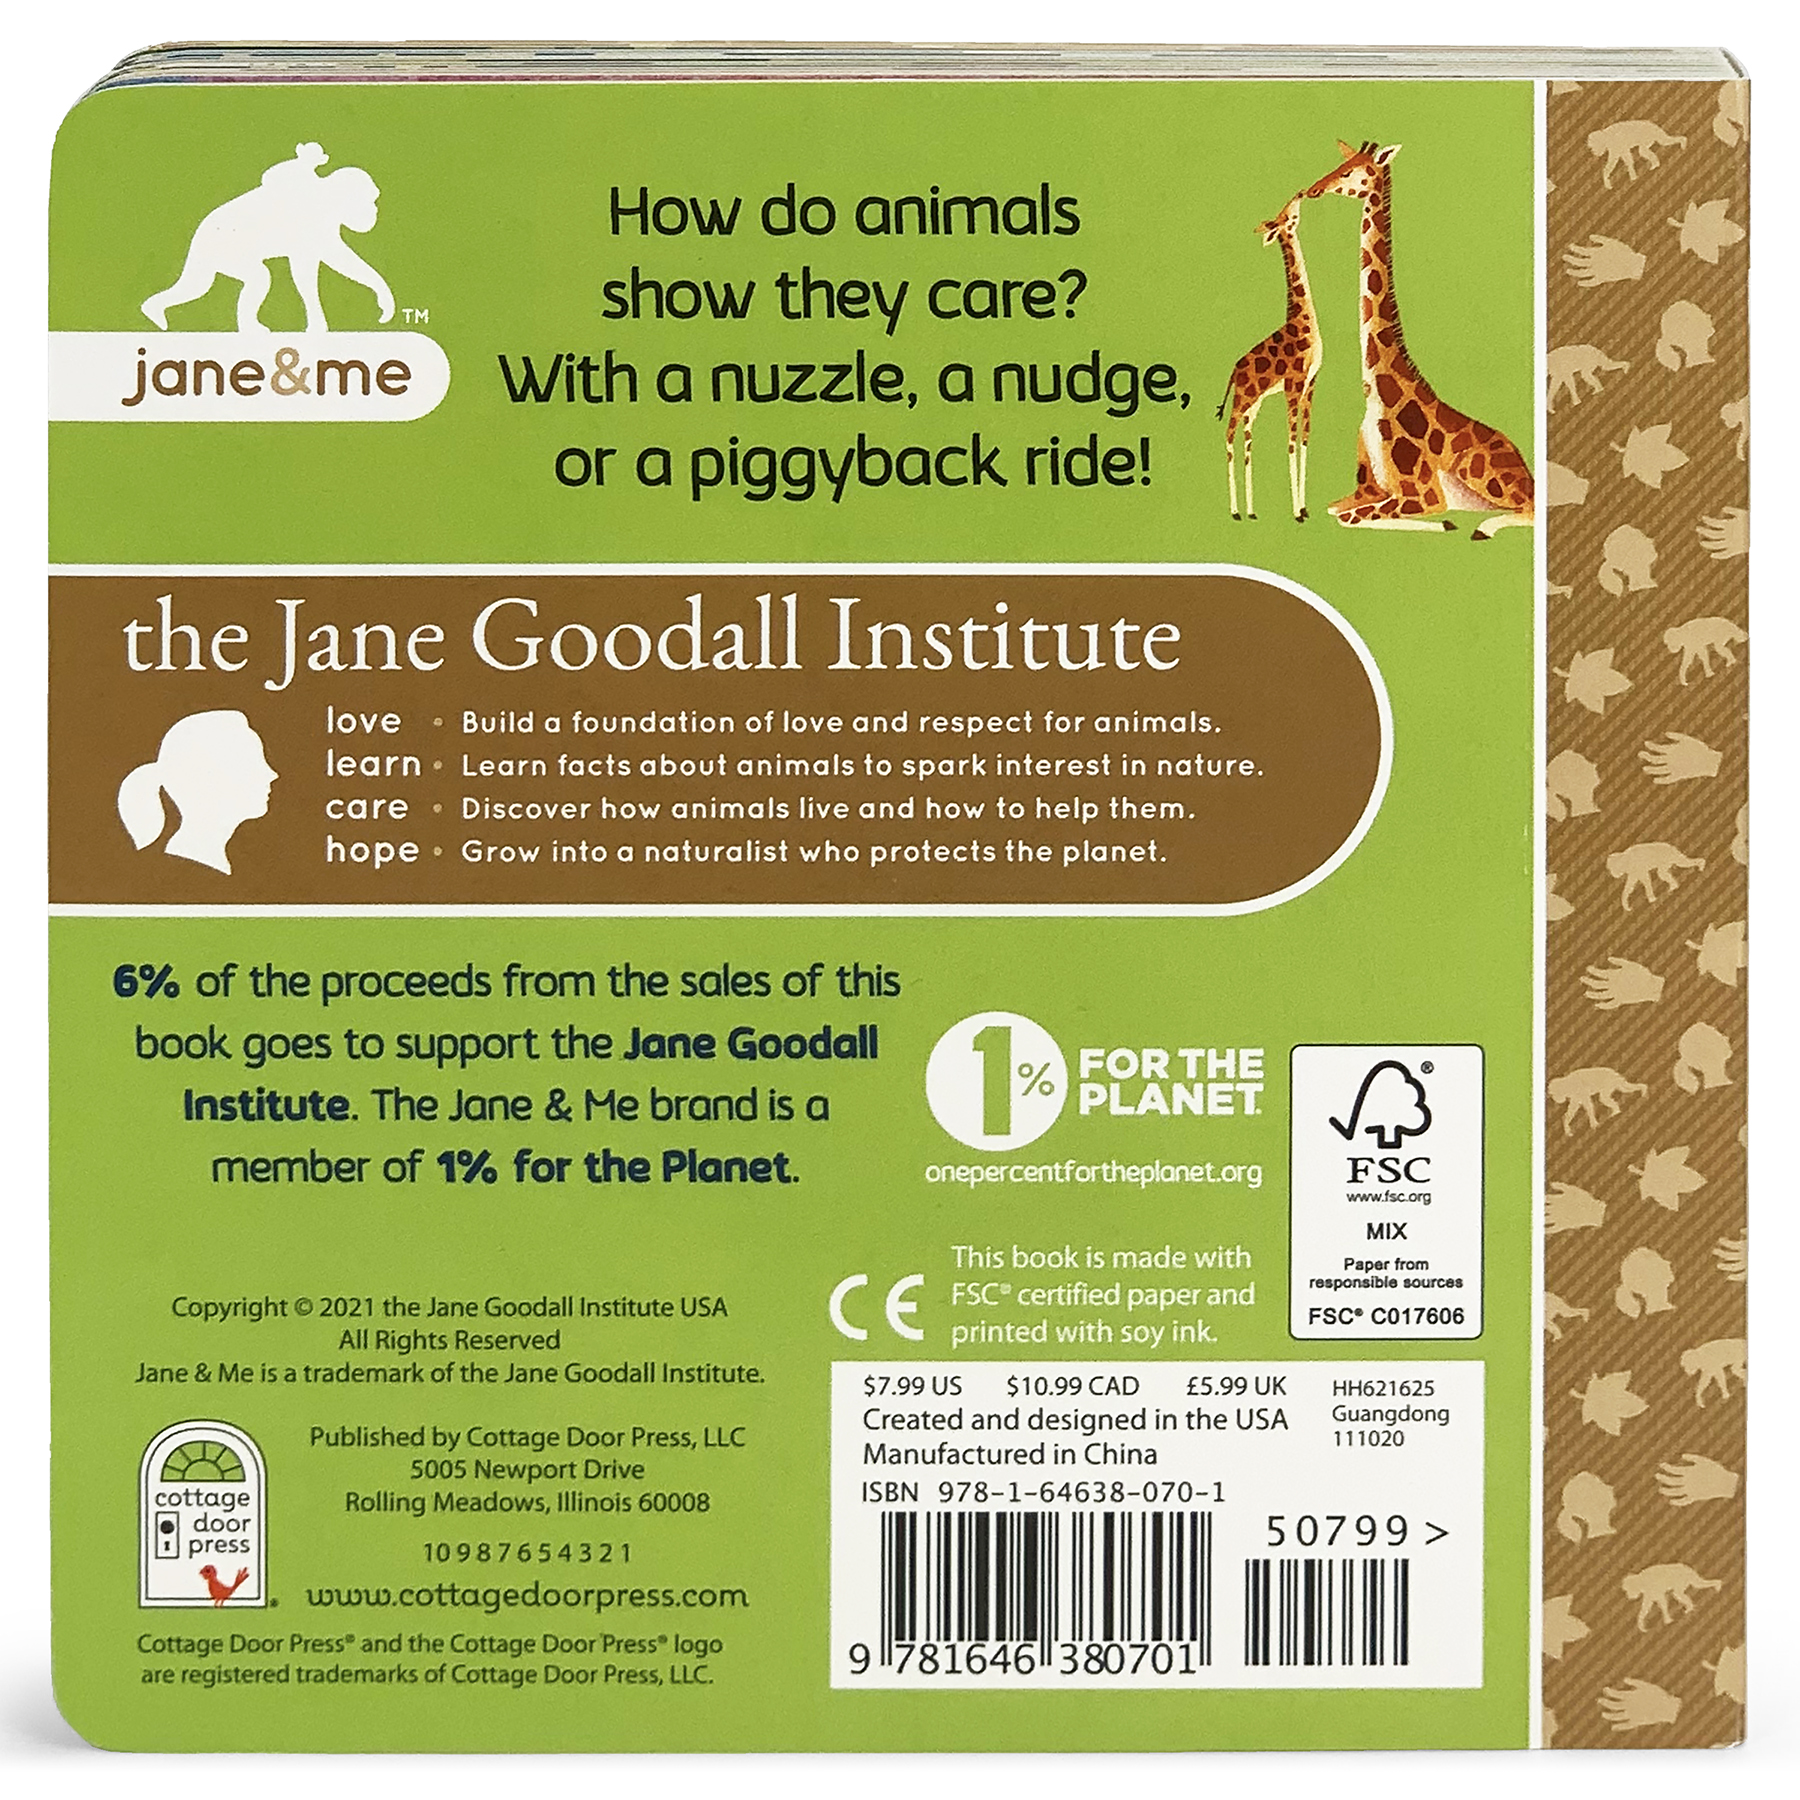 Jane & Me Care (The Jane Goodall Institute)